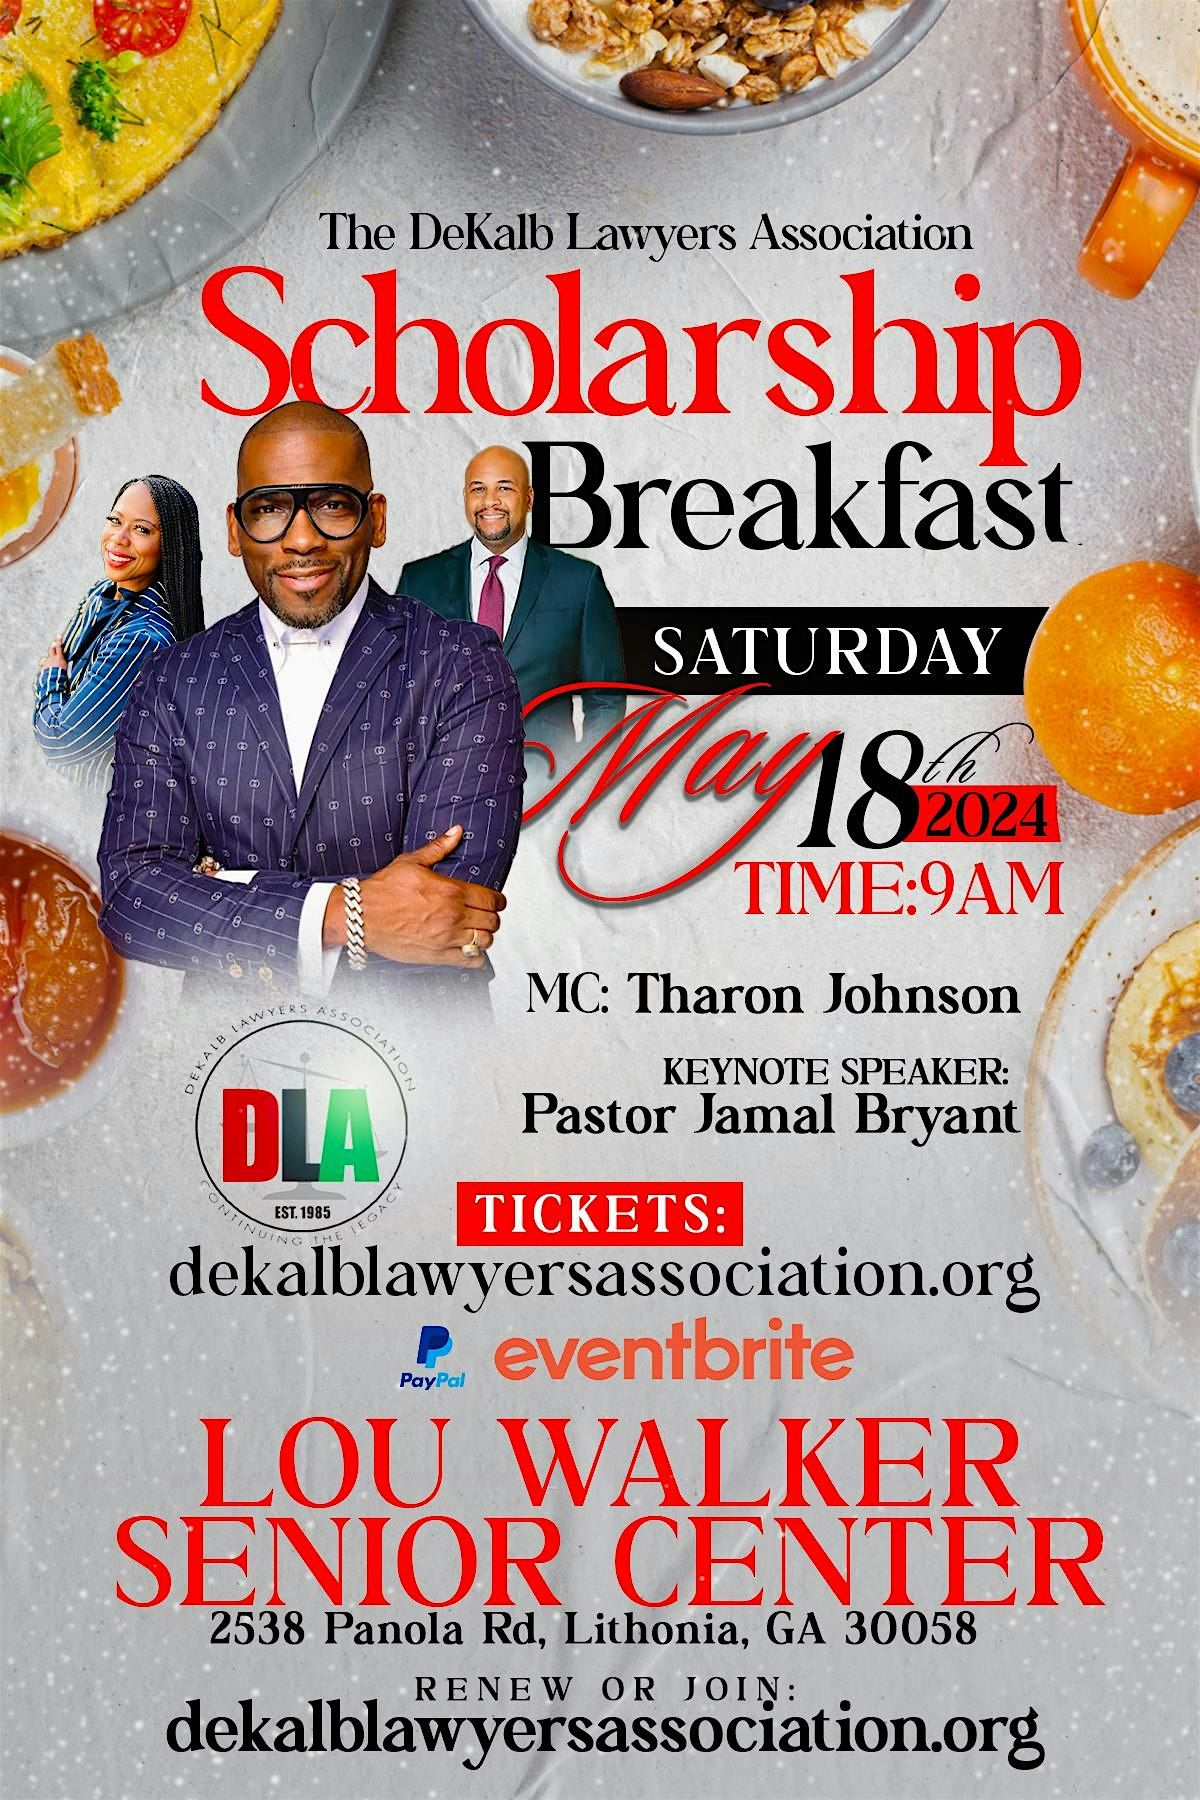 DeKalb Lawyers Association's Annual Scholarship Breakfast